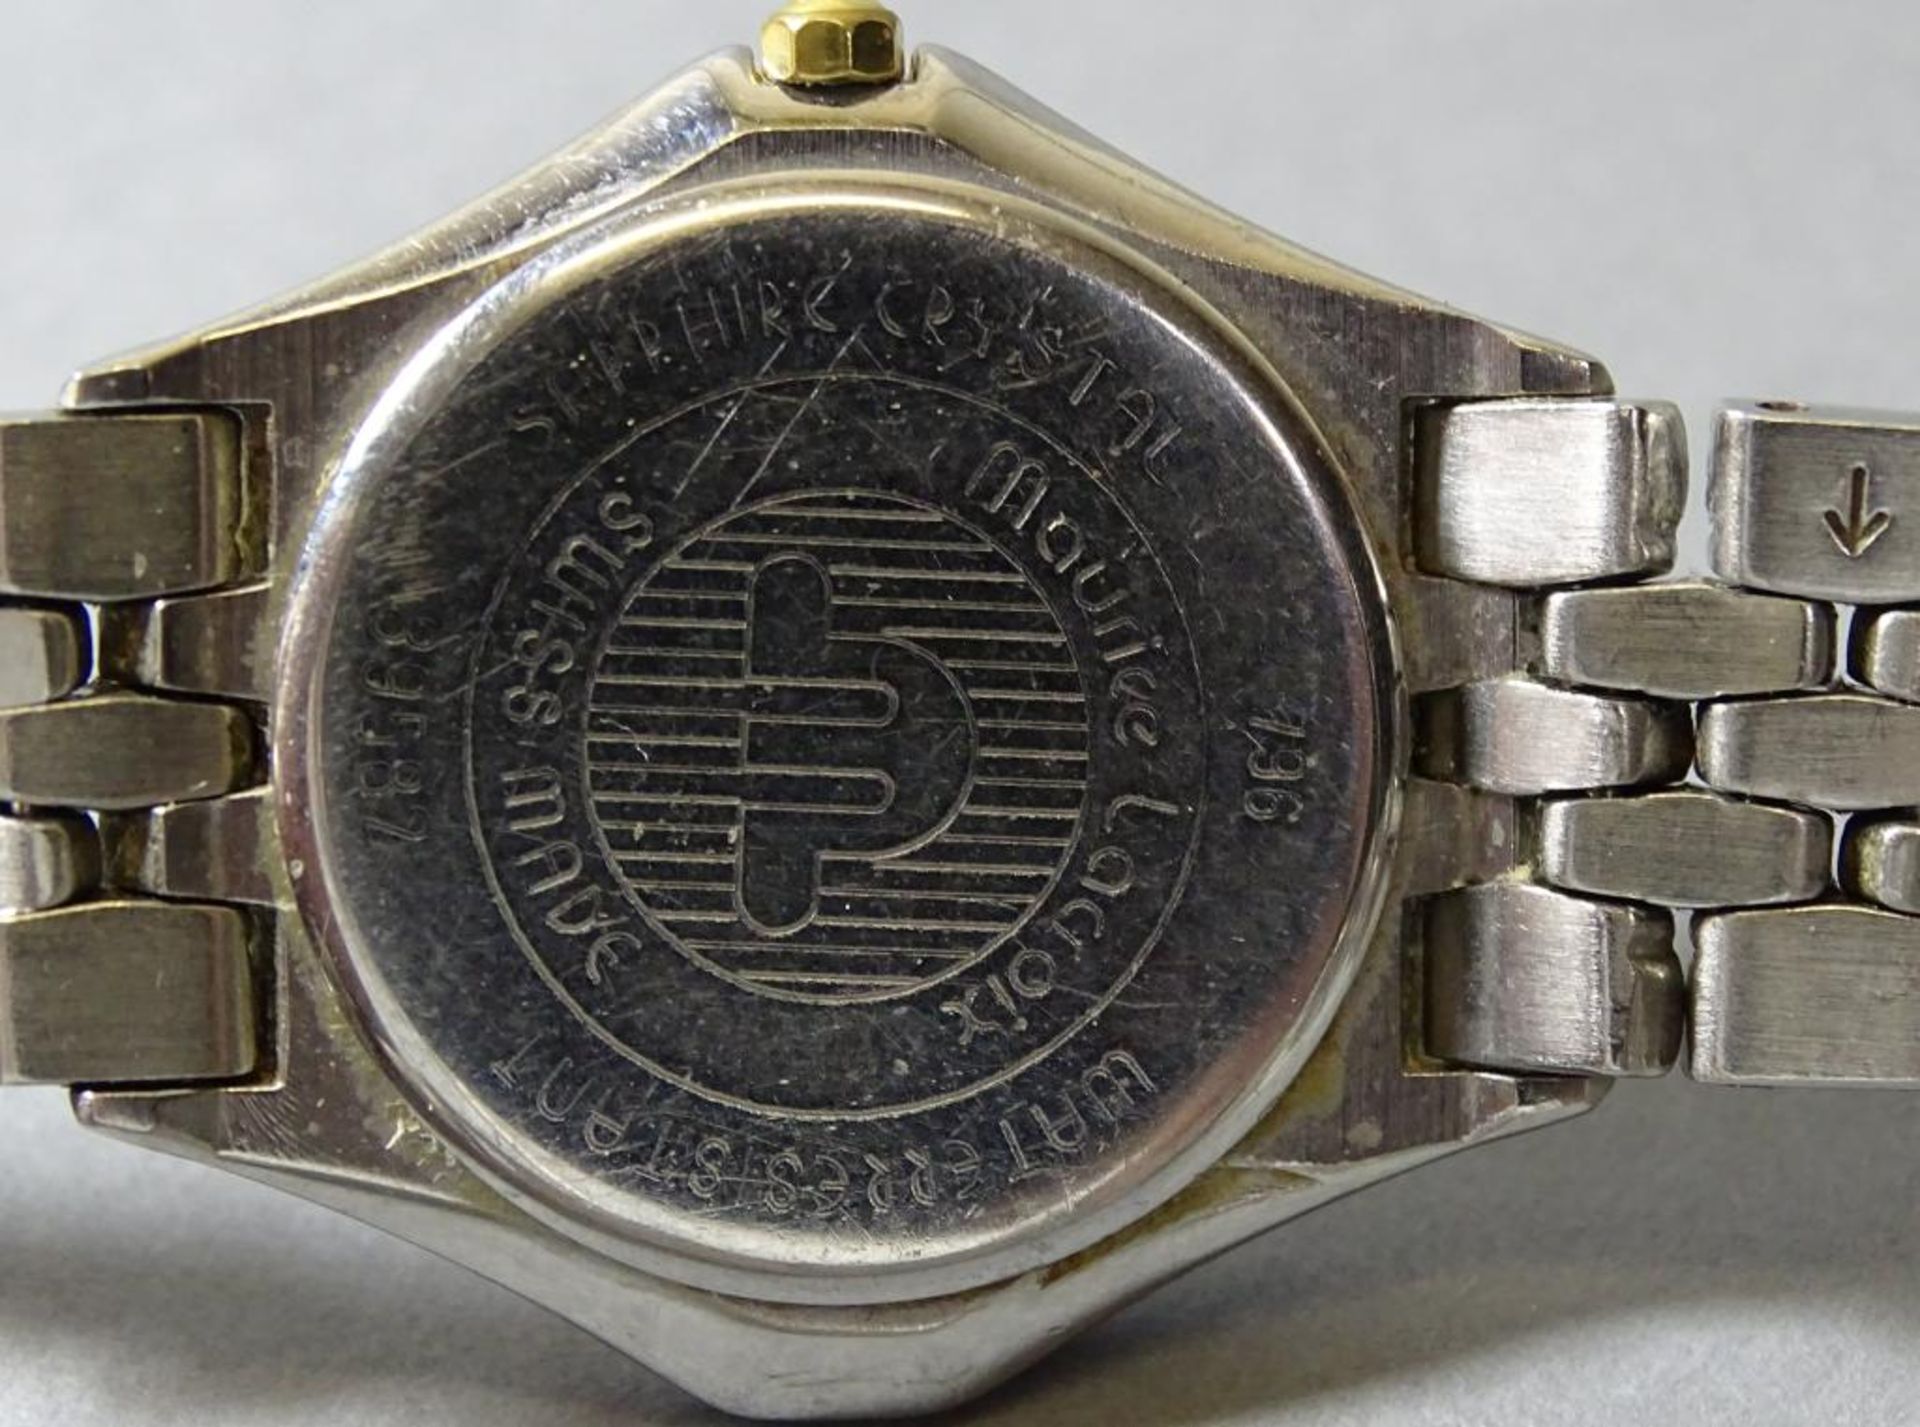 Damen Armbanduhr "Maurice Lacroix",Stahl+Gold,Saphirglas, Quartz,Funktion nicht geprüf - Bild 4 aus 5